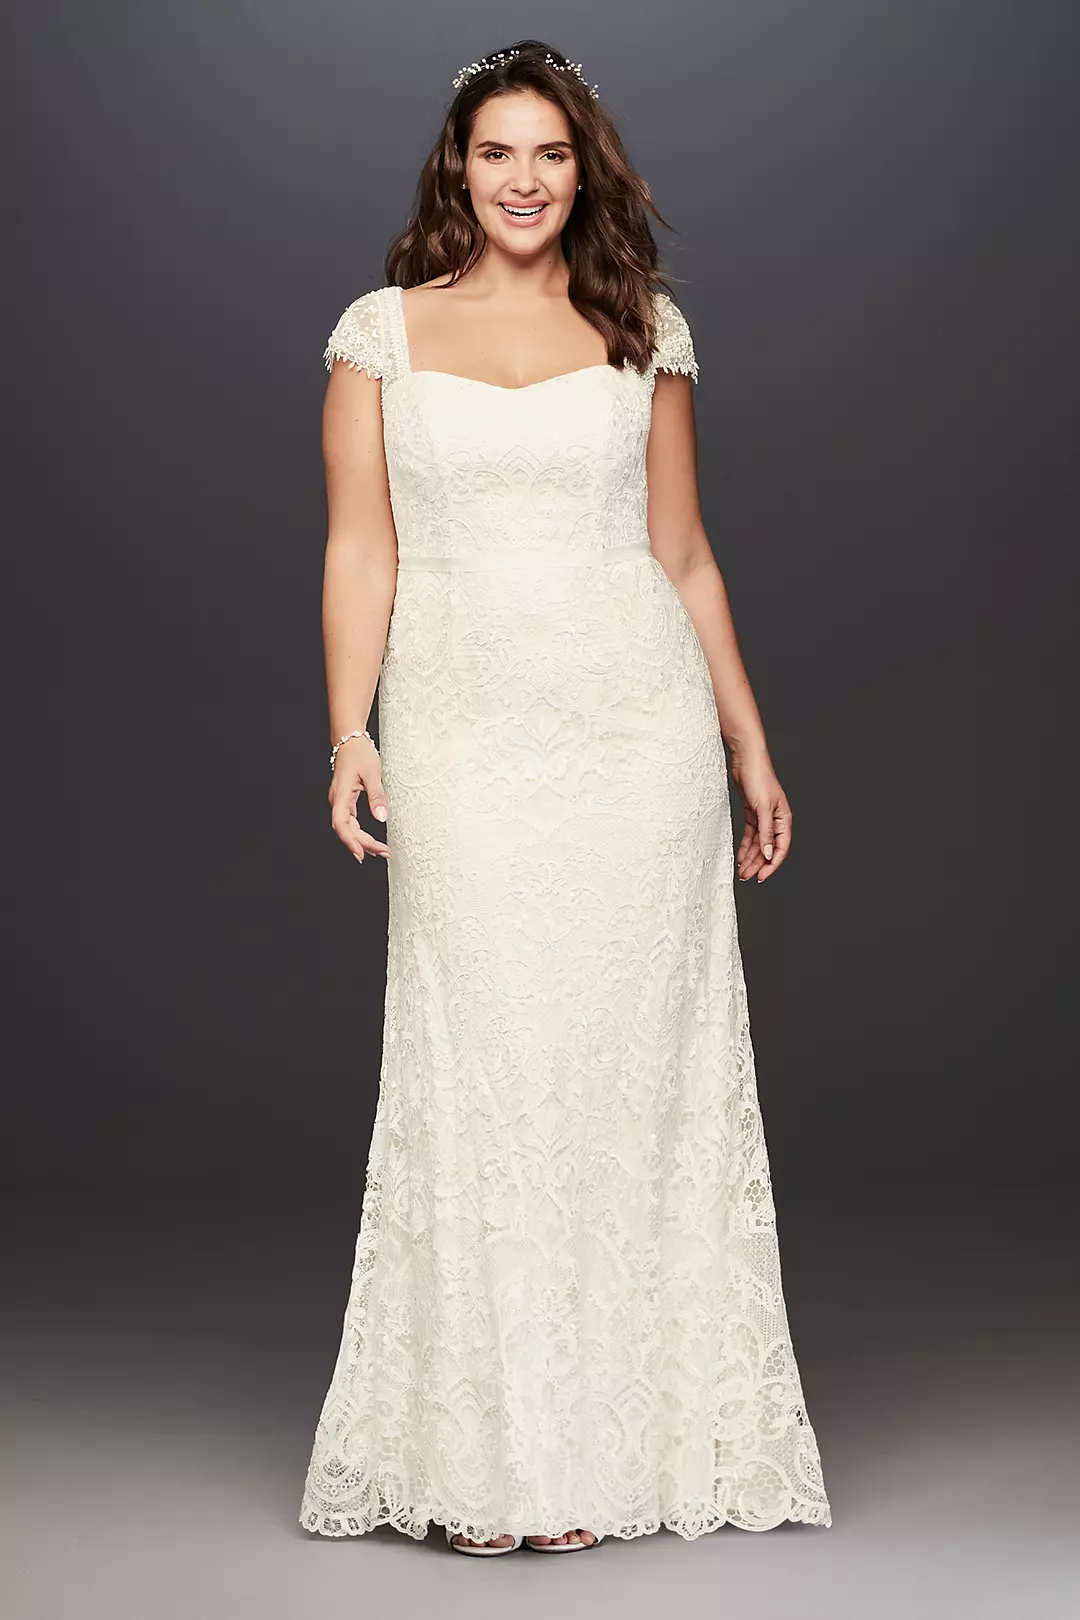 Melissa Sweet Beaded Cap Sleeve Lace Wedding Dress Image